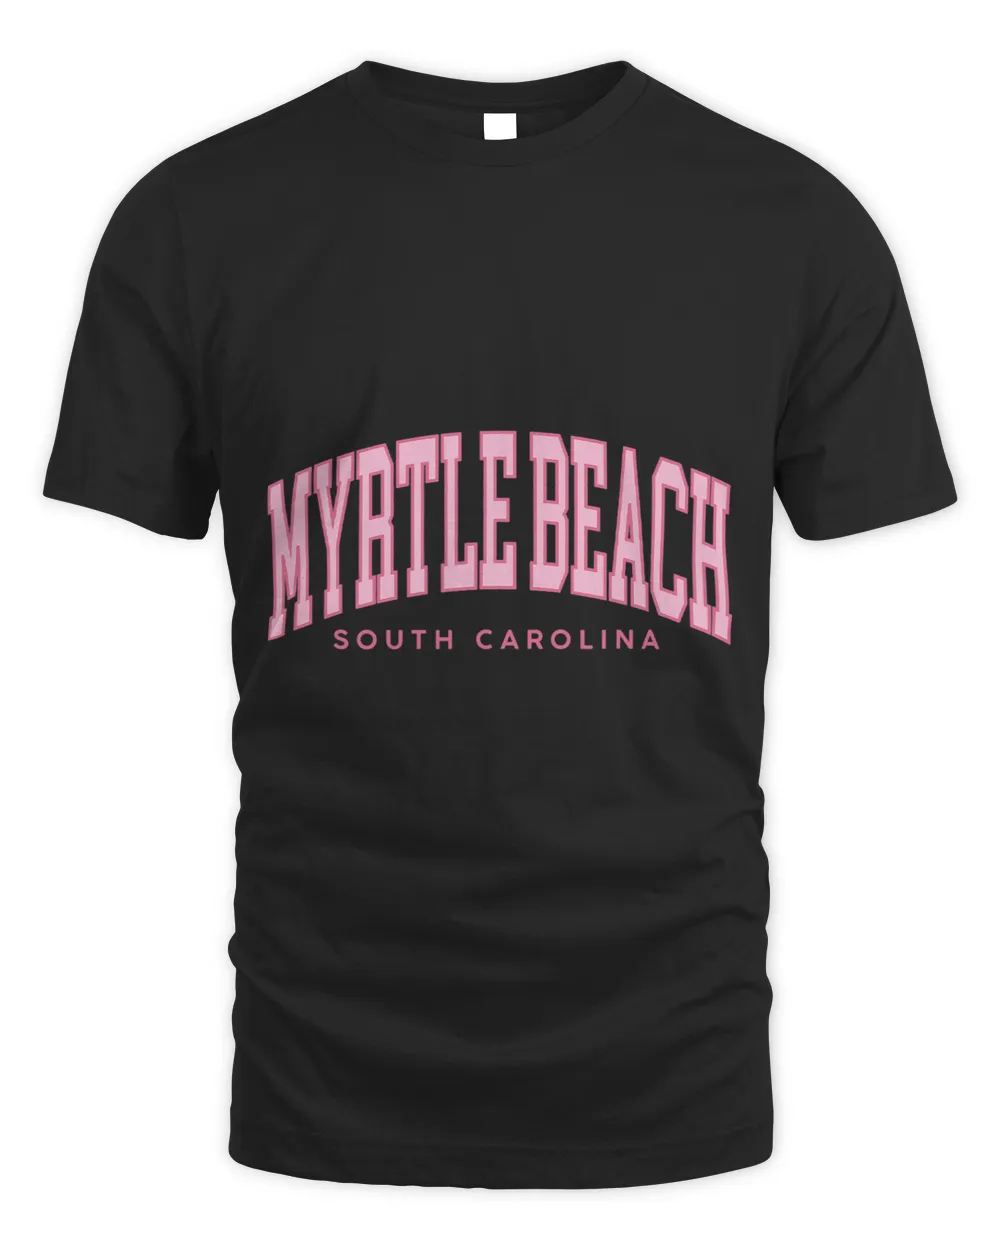 Retro Myrtle Beach South Carolina beach womens girls summer